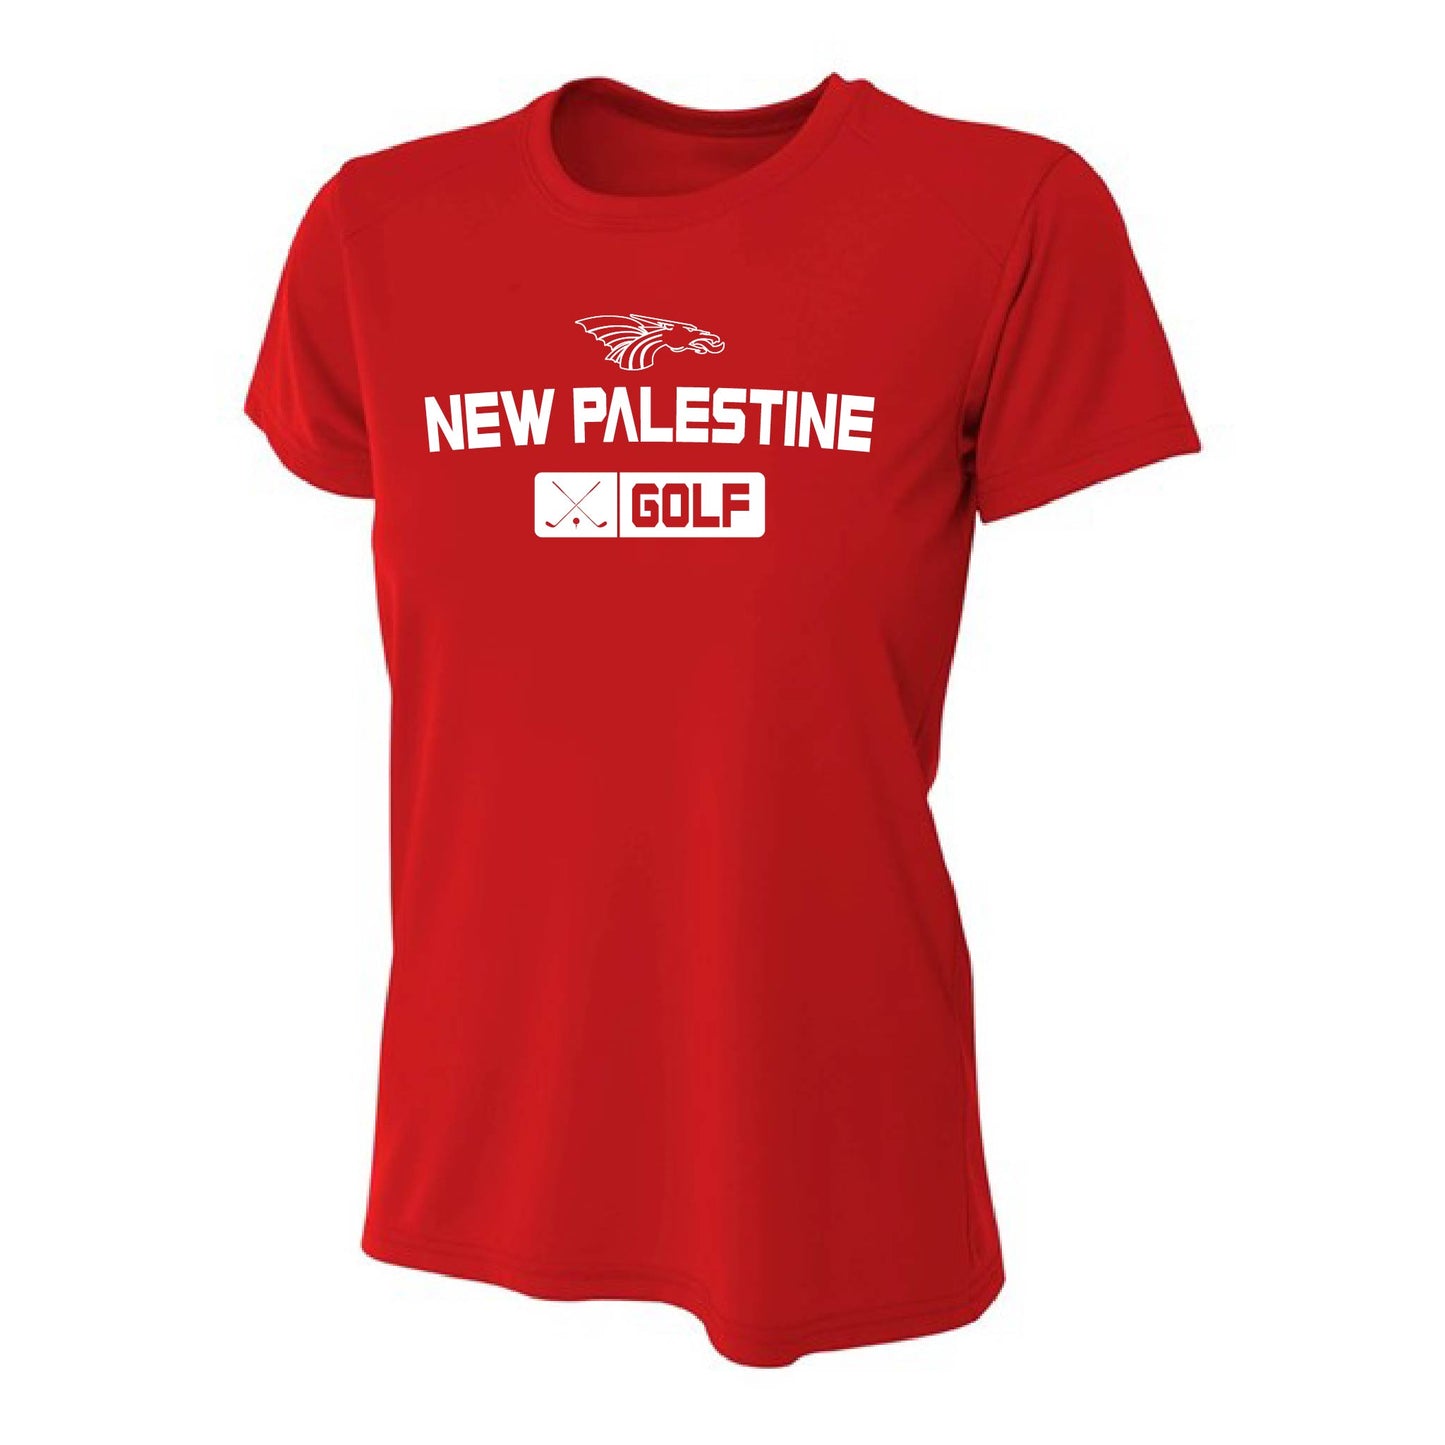 Womens S/S T-Shirt - New Palestine Golf